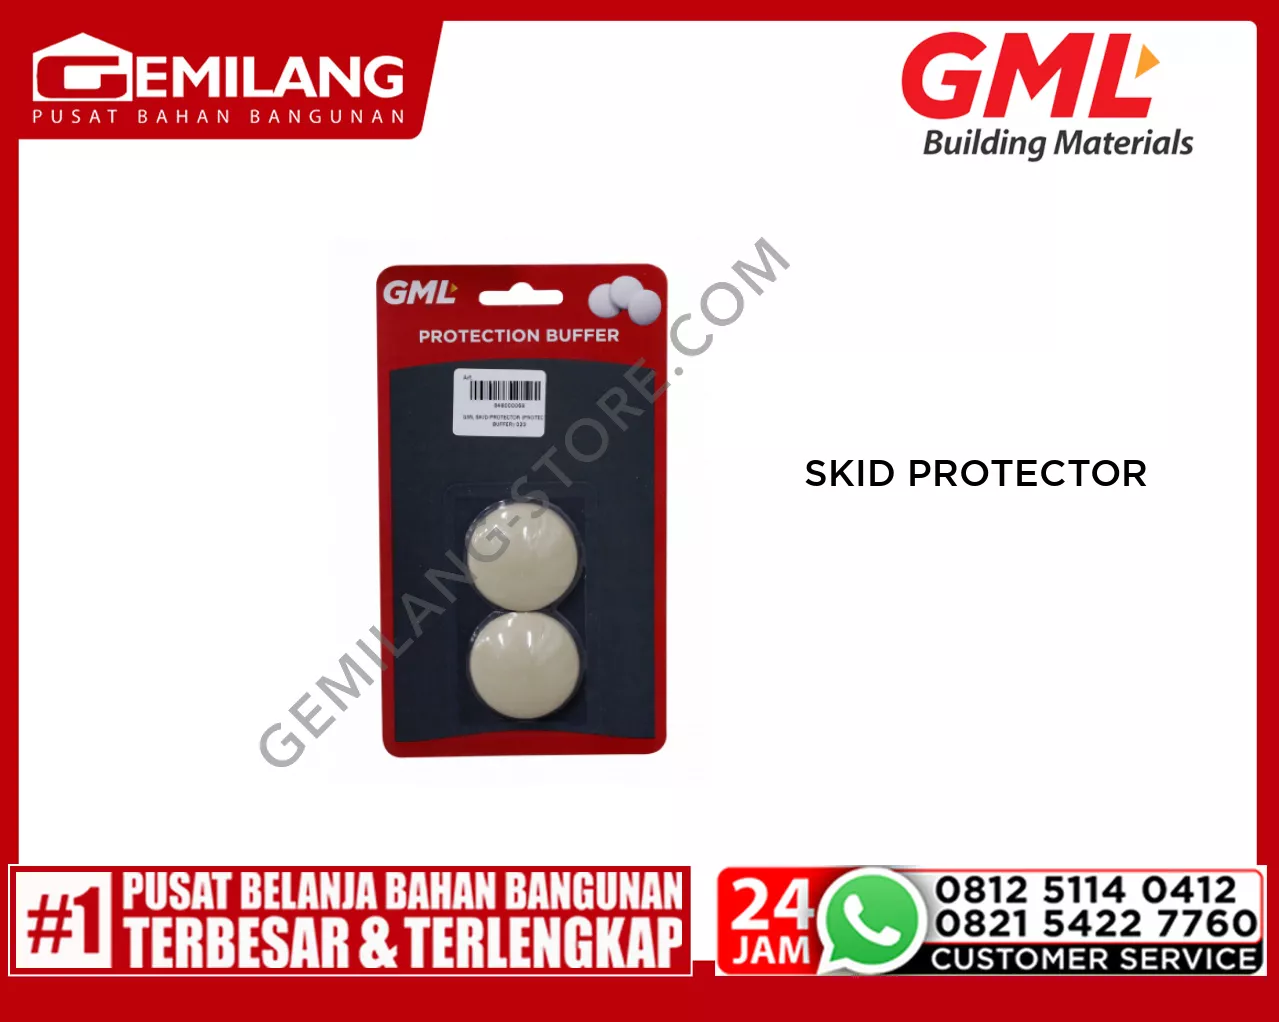 GML SKID PROTECTOR (PROTECTION BUFFER) 023